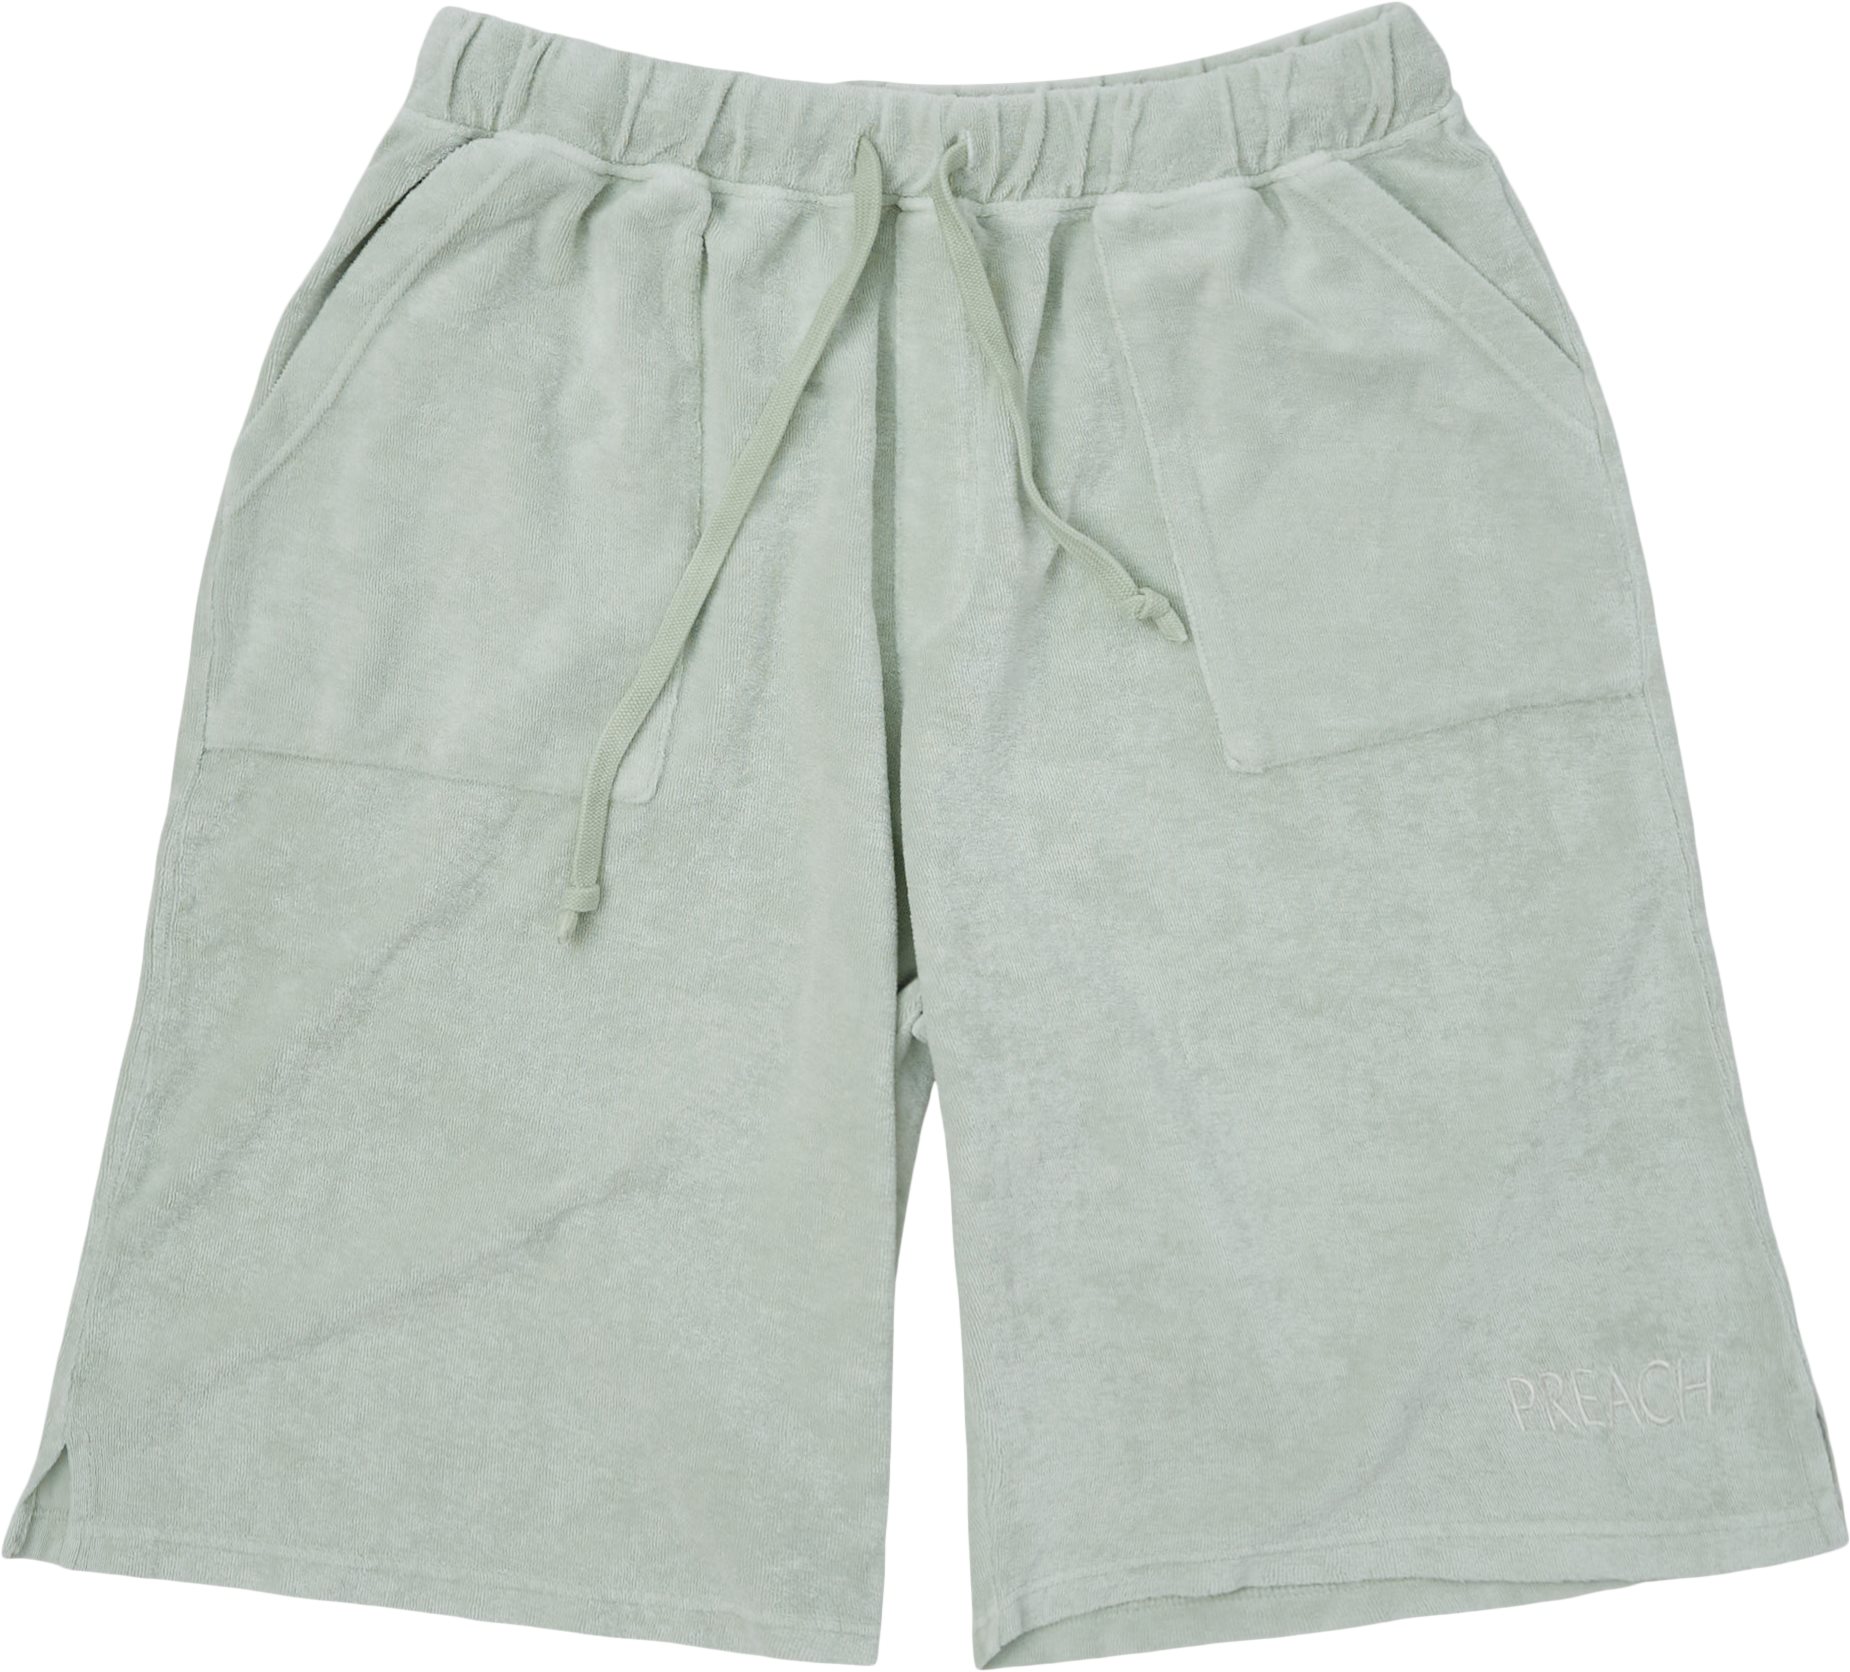 Long Frottee Shorts - Shorts - Loose fit - Grön